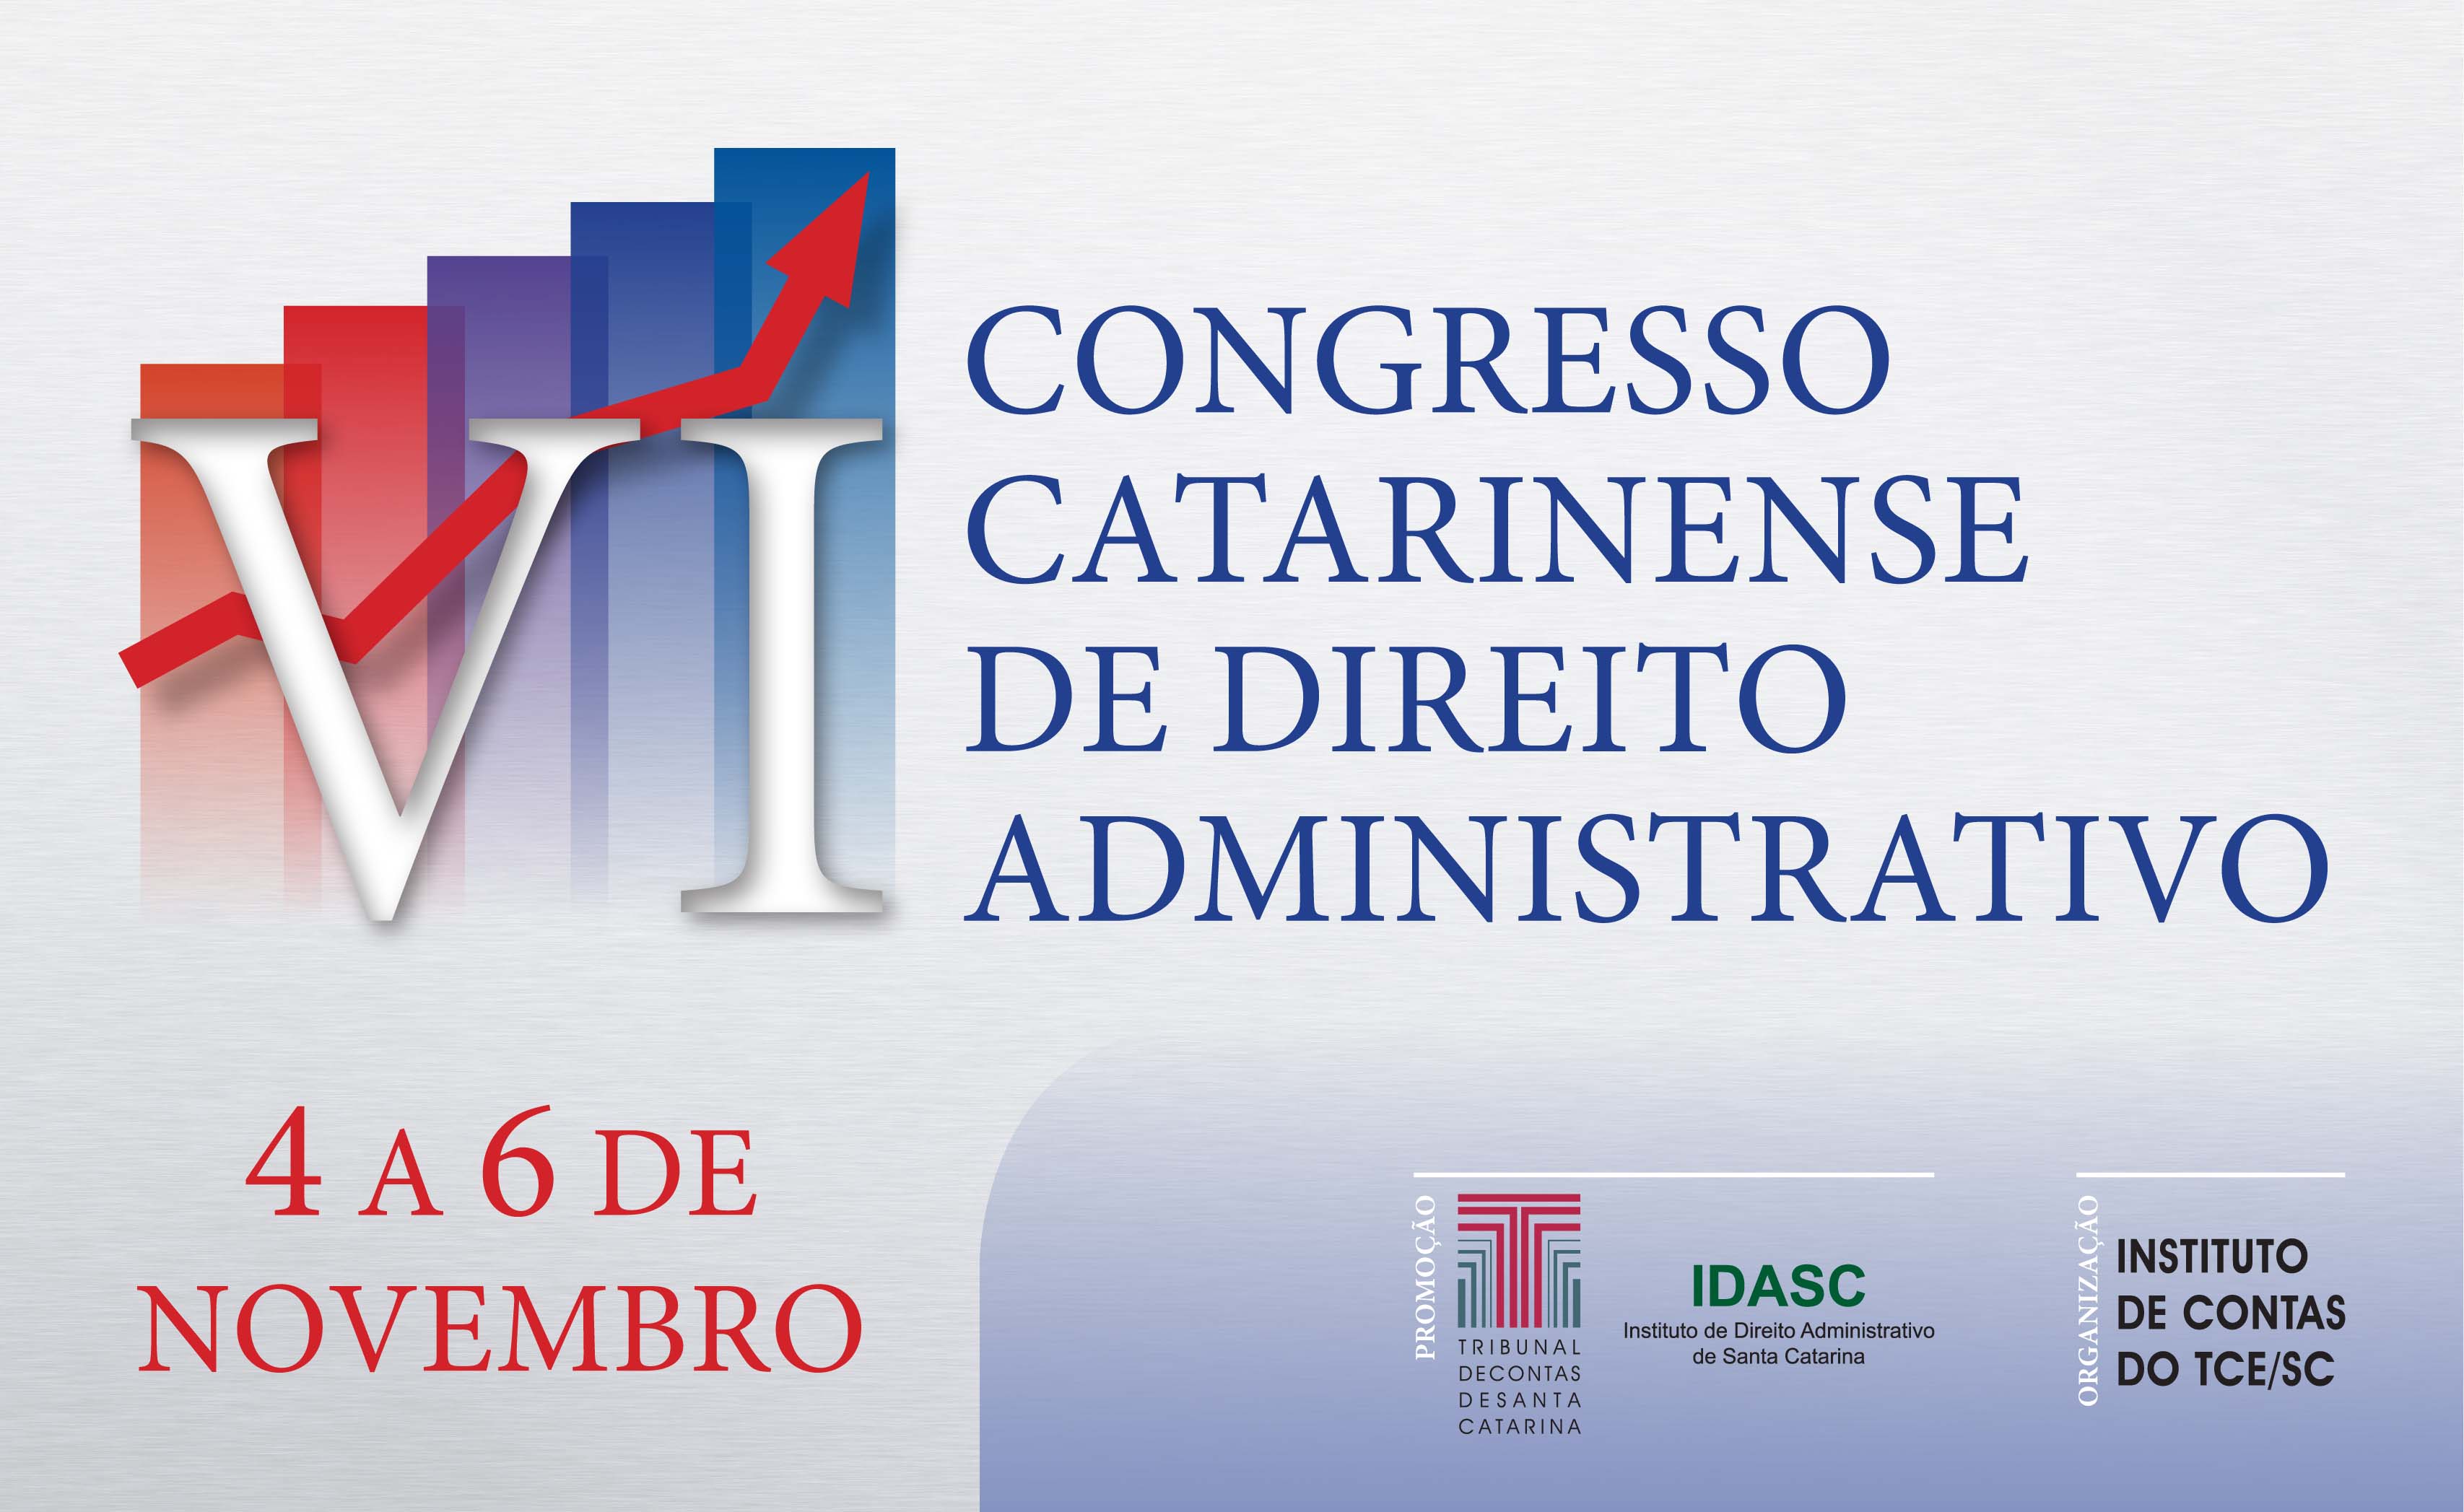 TCE/SC e Idasc promovem VI Congresso Catarinense de Direito Administrativo de 4 a 6 de novembro